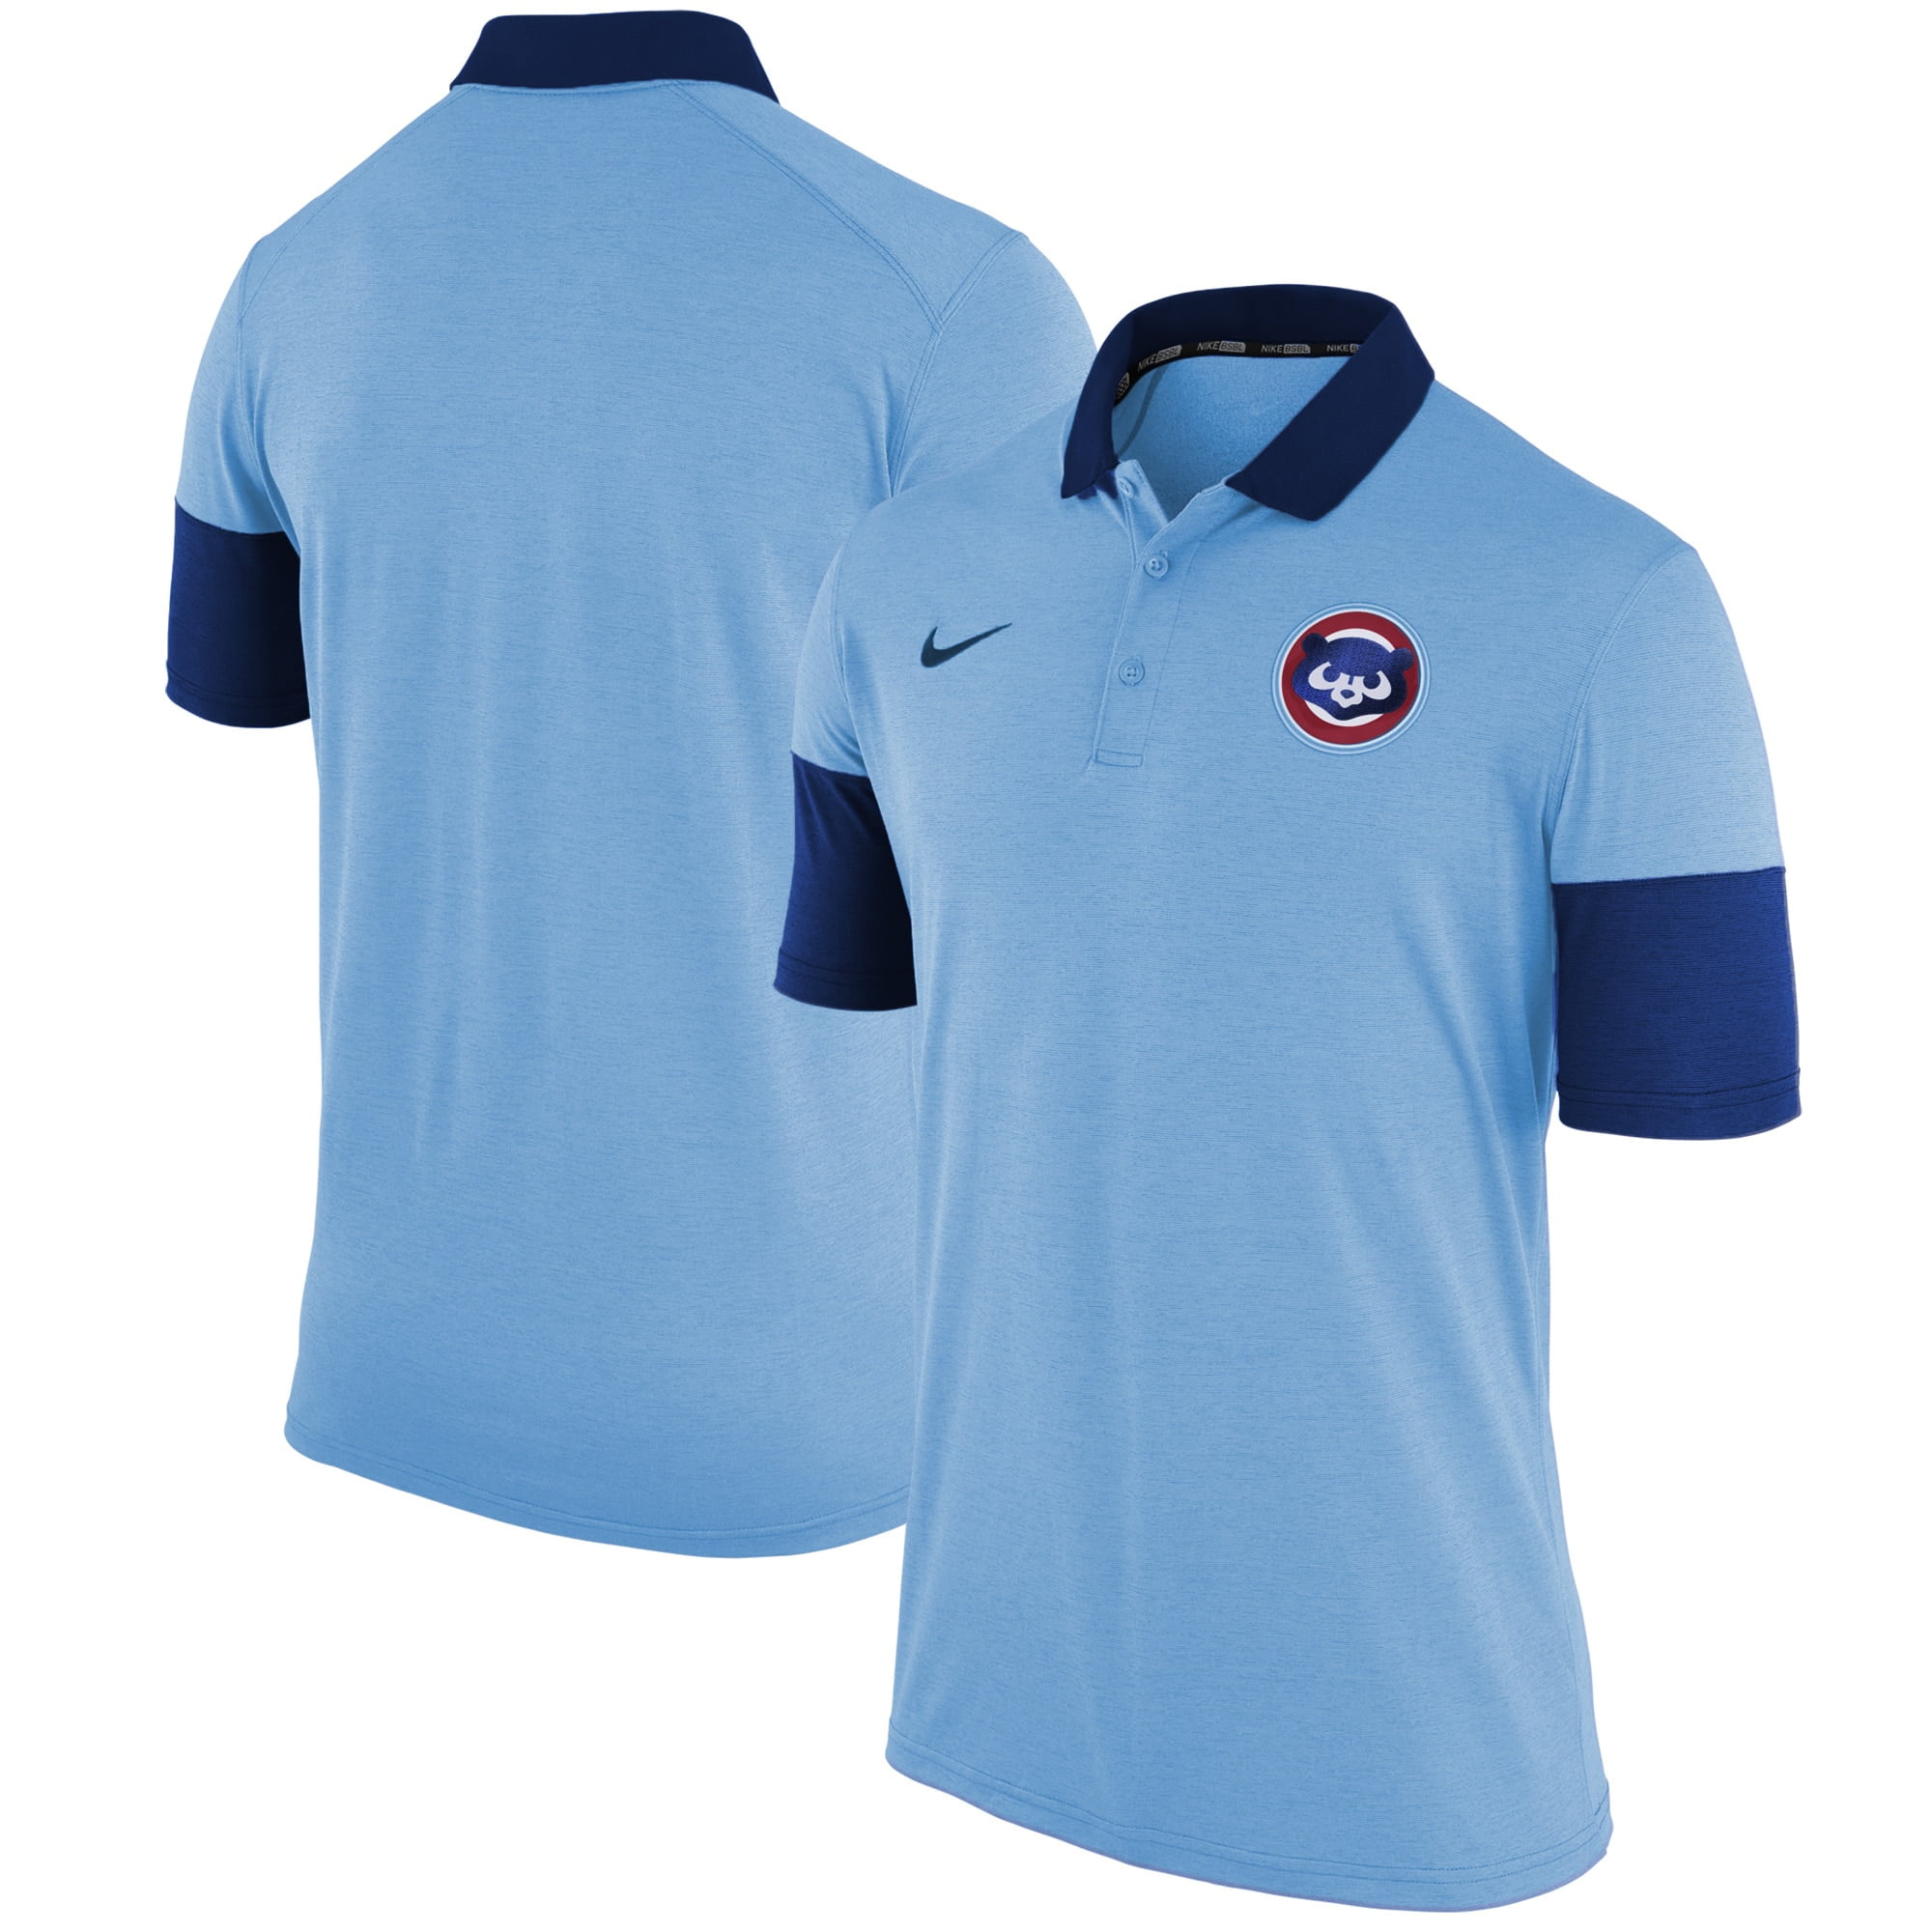 Blue Small Chicago Cubs Mens 3 Button Dri-Fit Polo Shirt